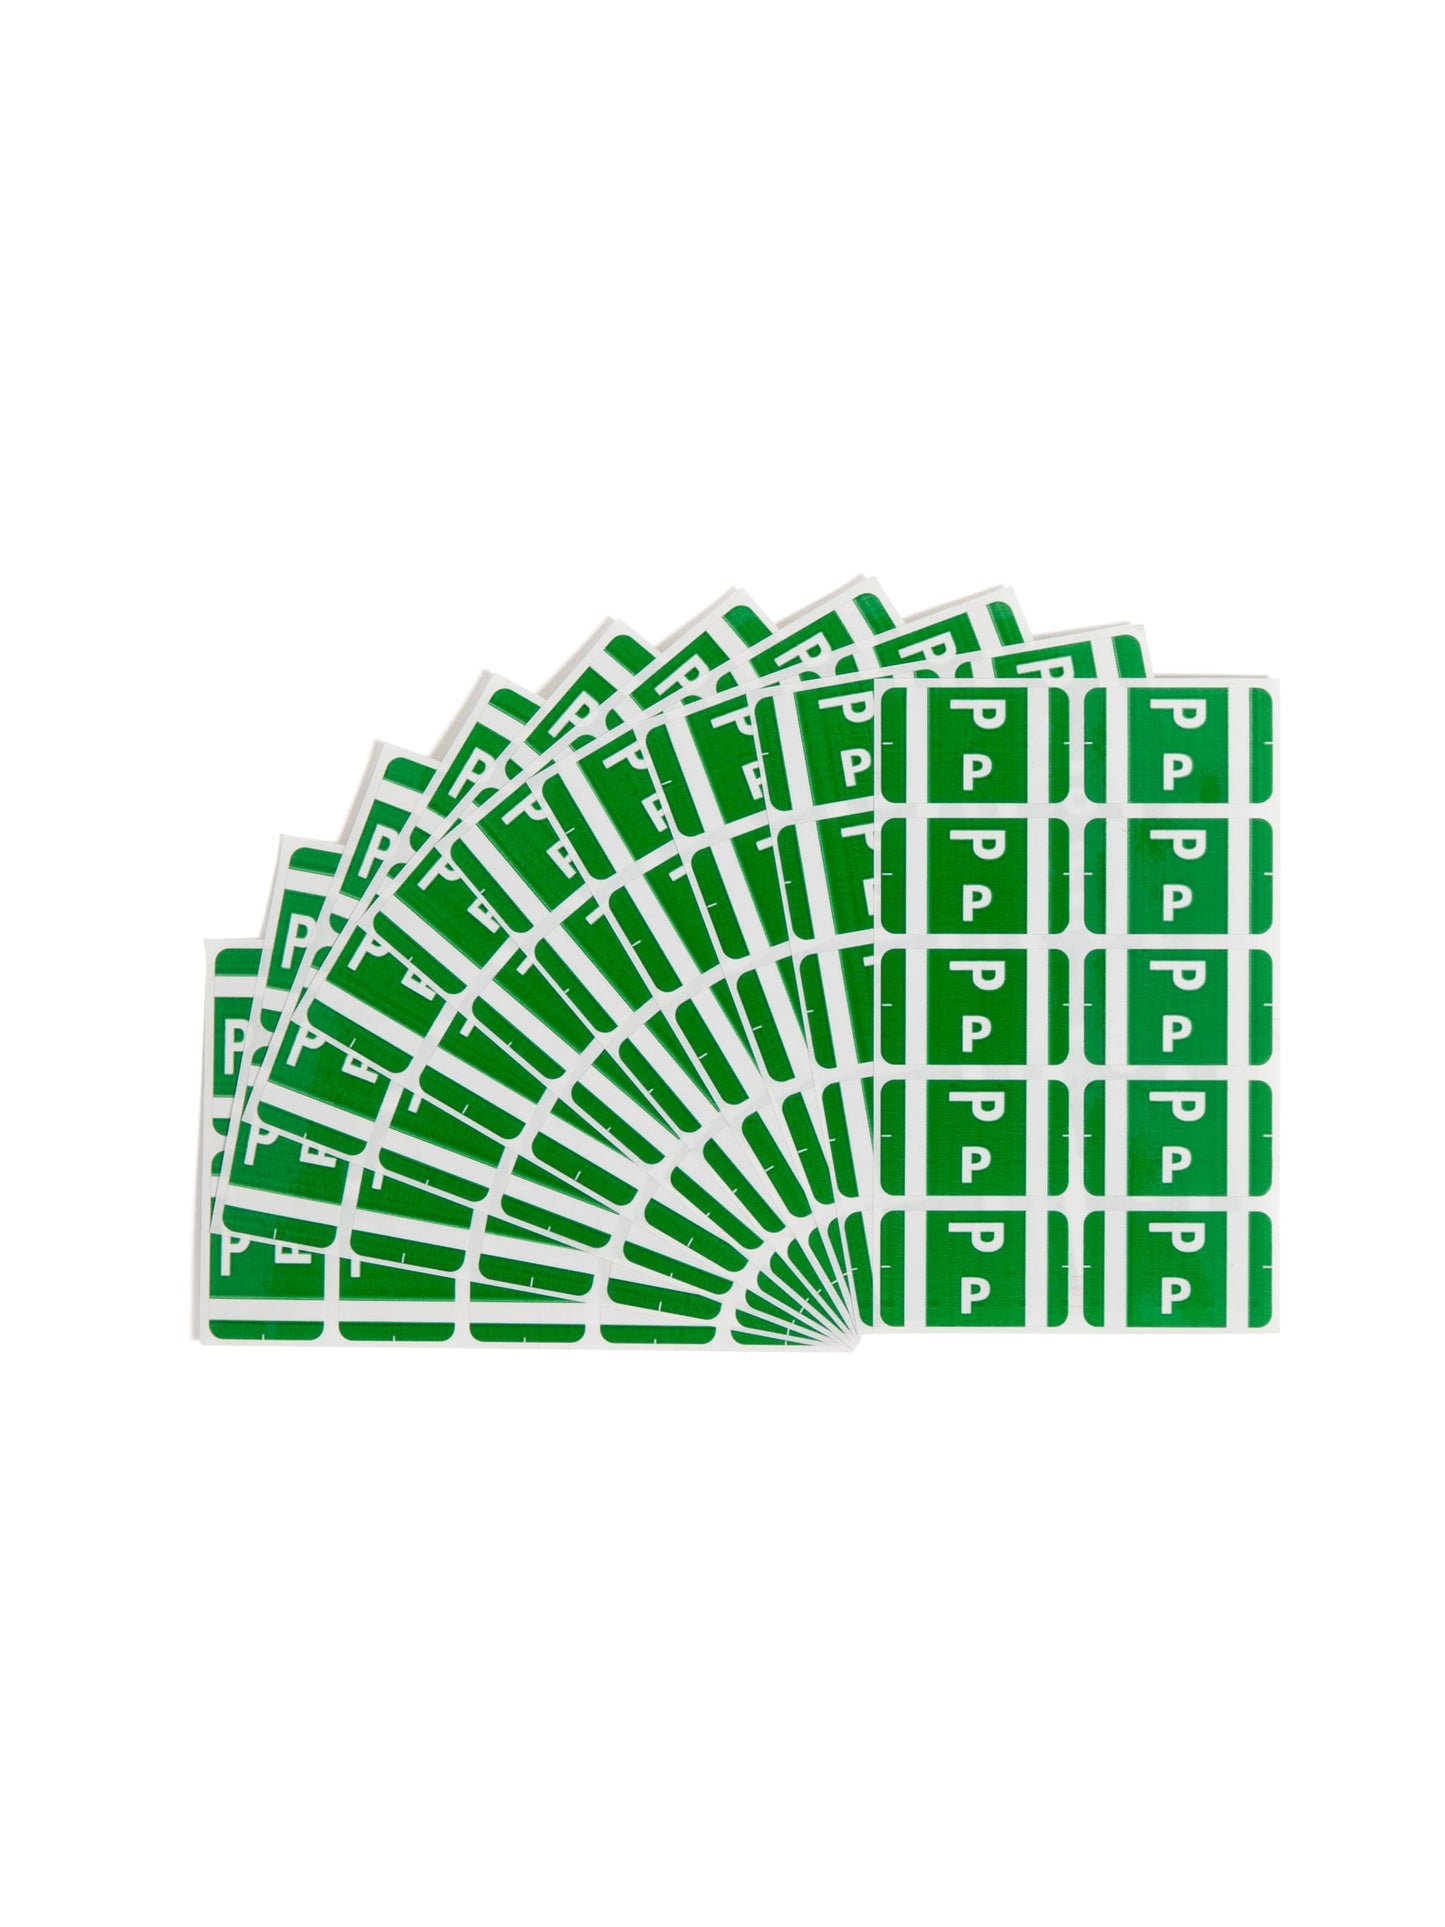 AlphaZ® ACCS Color Coded Alphabetic Labels - Sheets, Dark Green Color, 1" X 1-5/8" Size, Set of 1, 086486671866